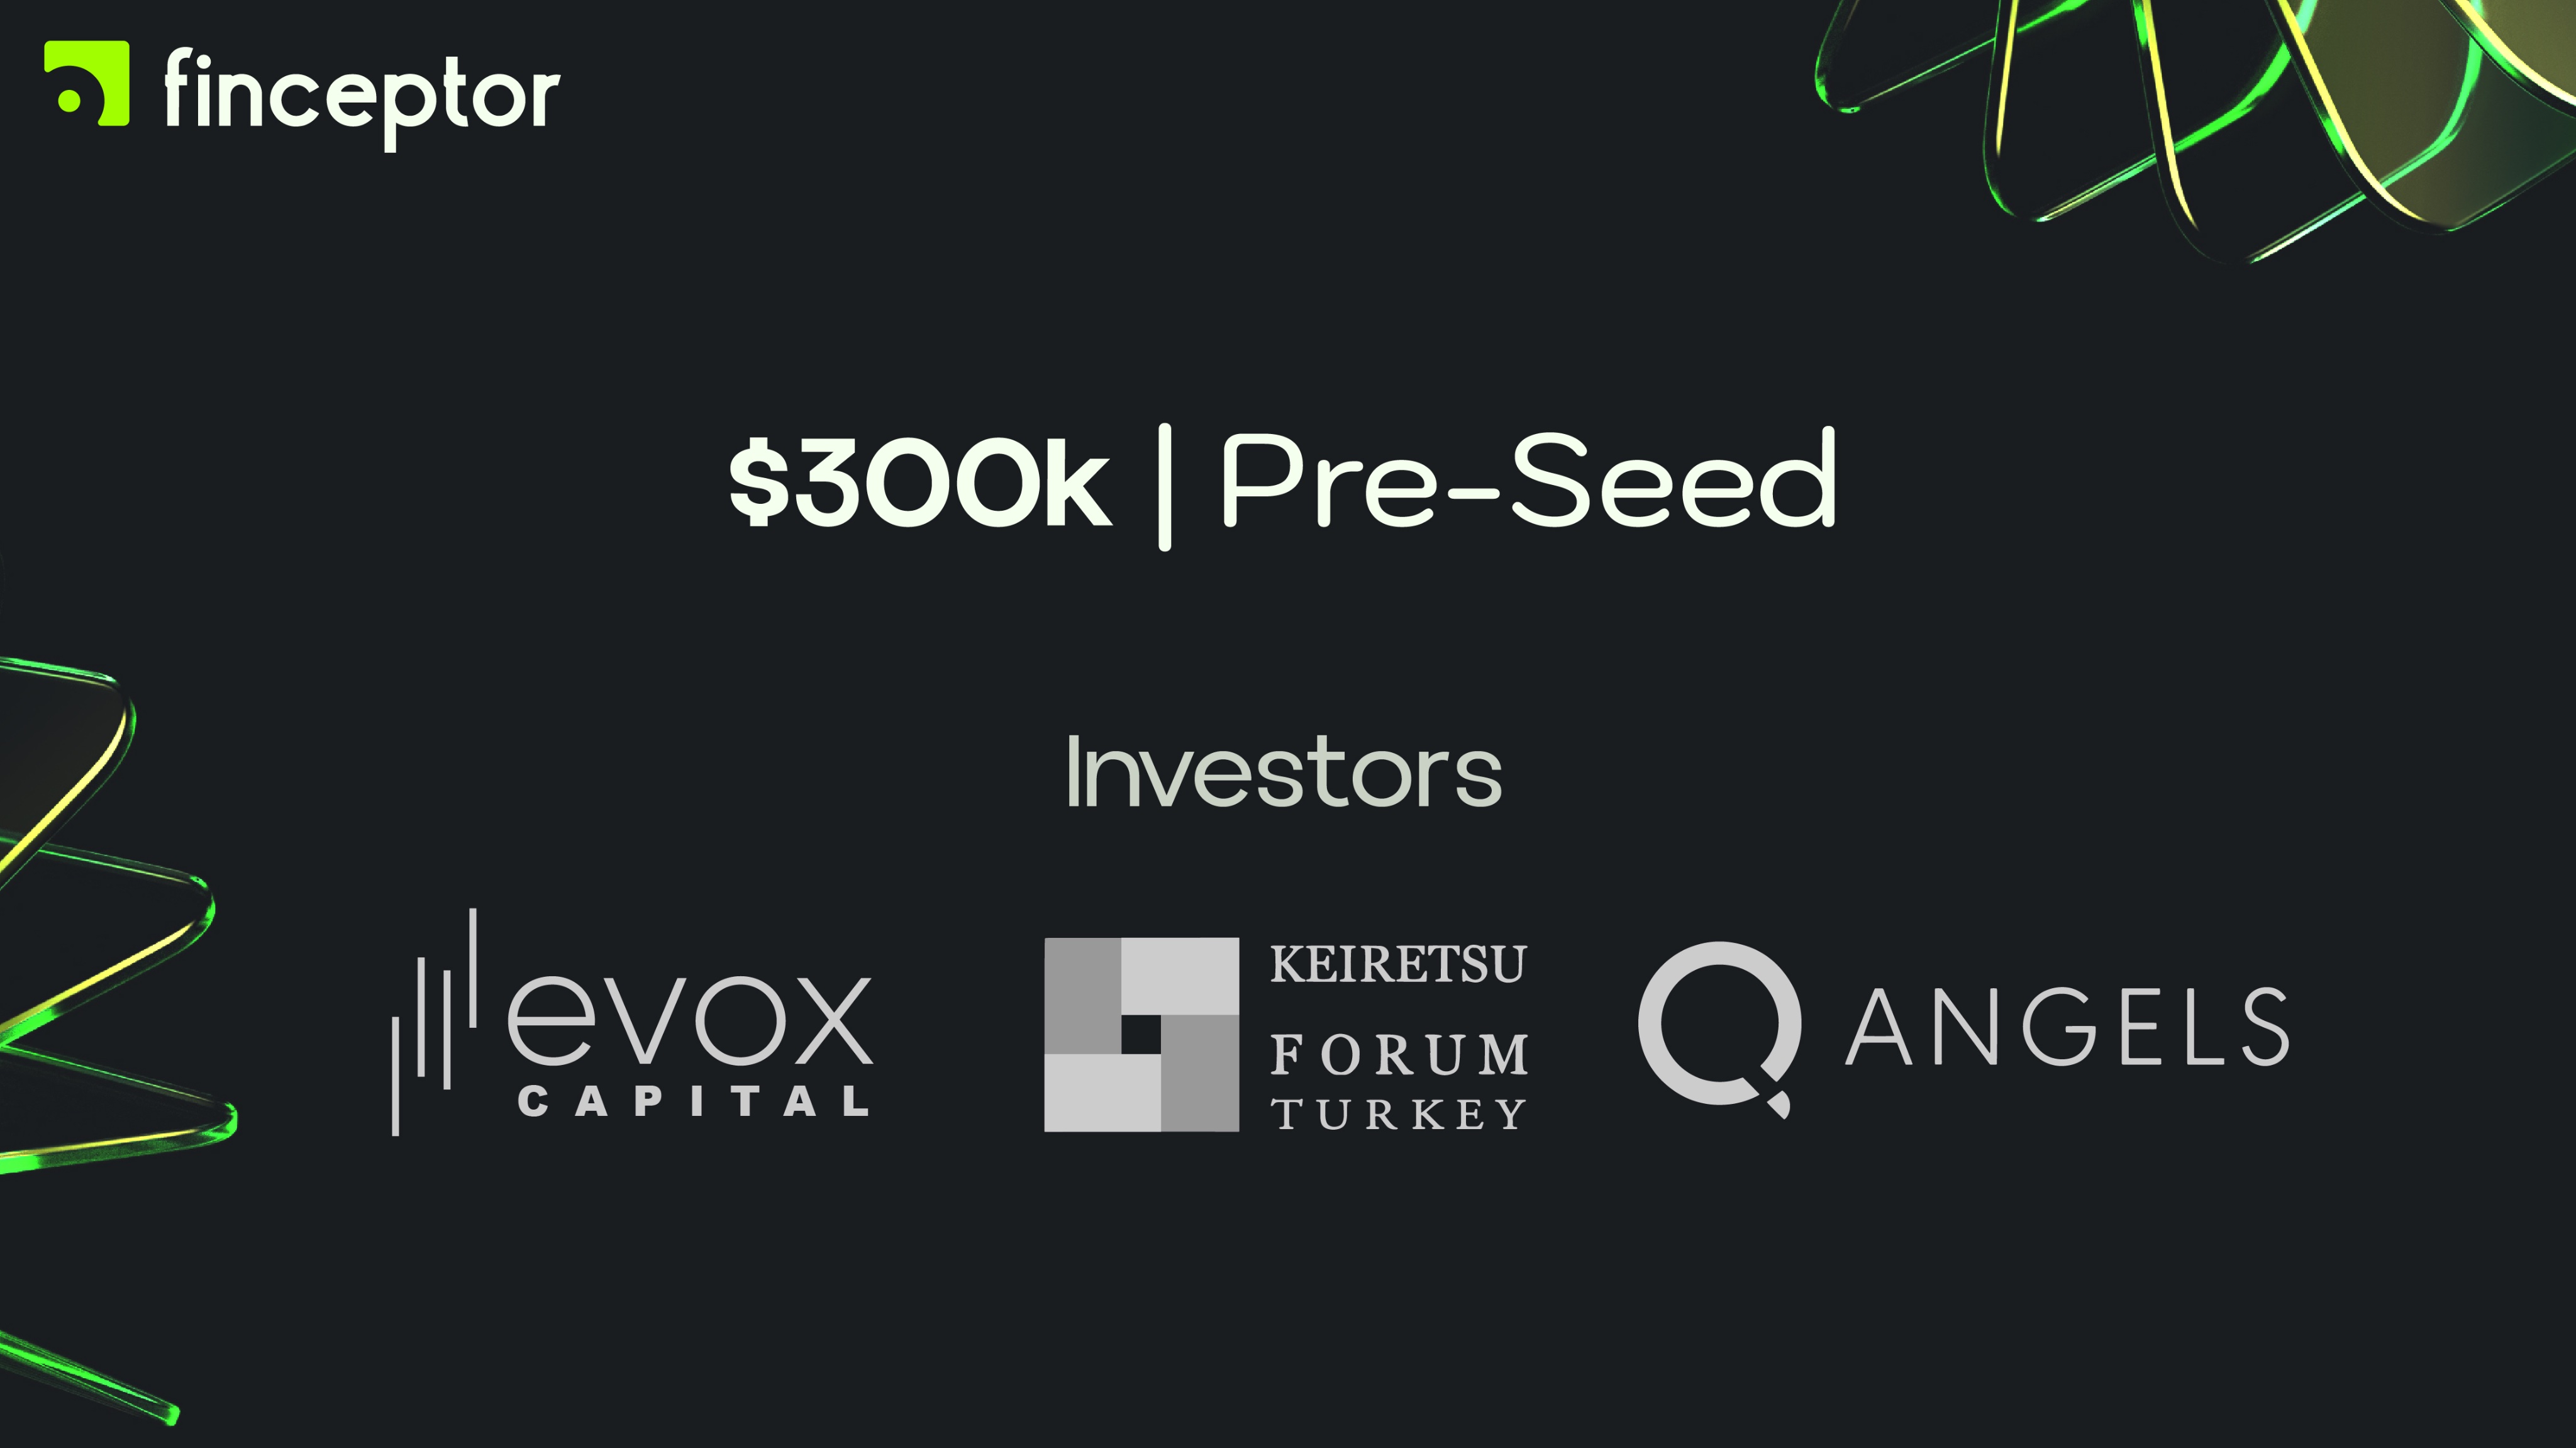 New Milestone: We've Raised Our $300K Pre-Seed Round